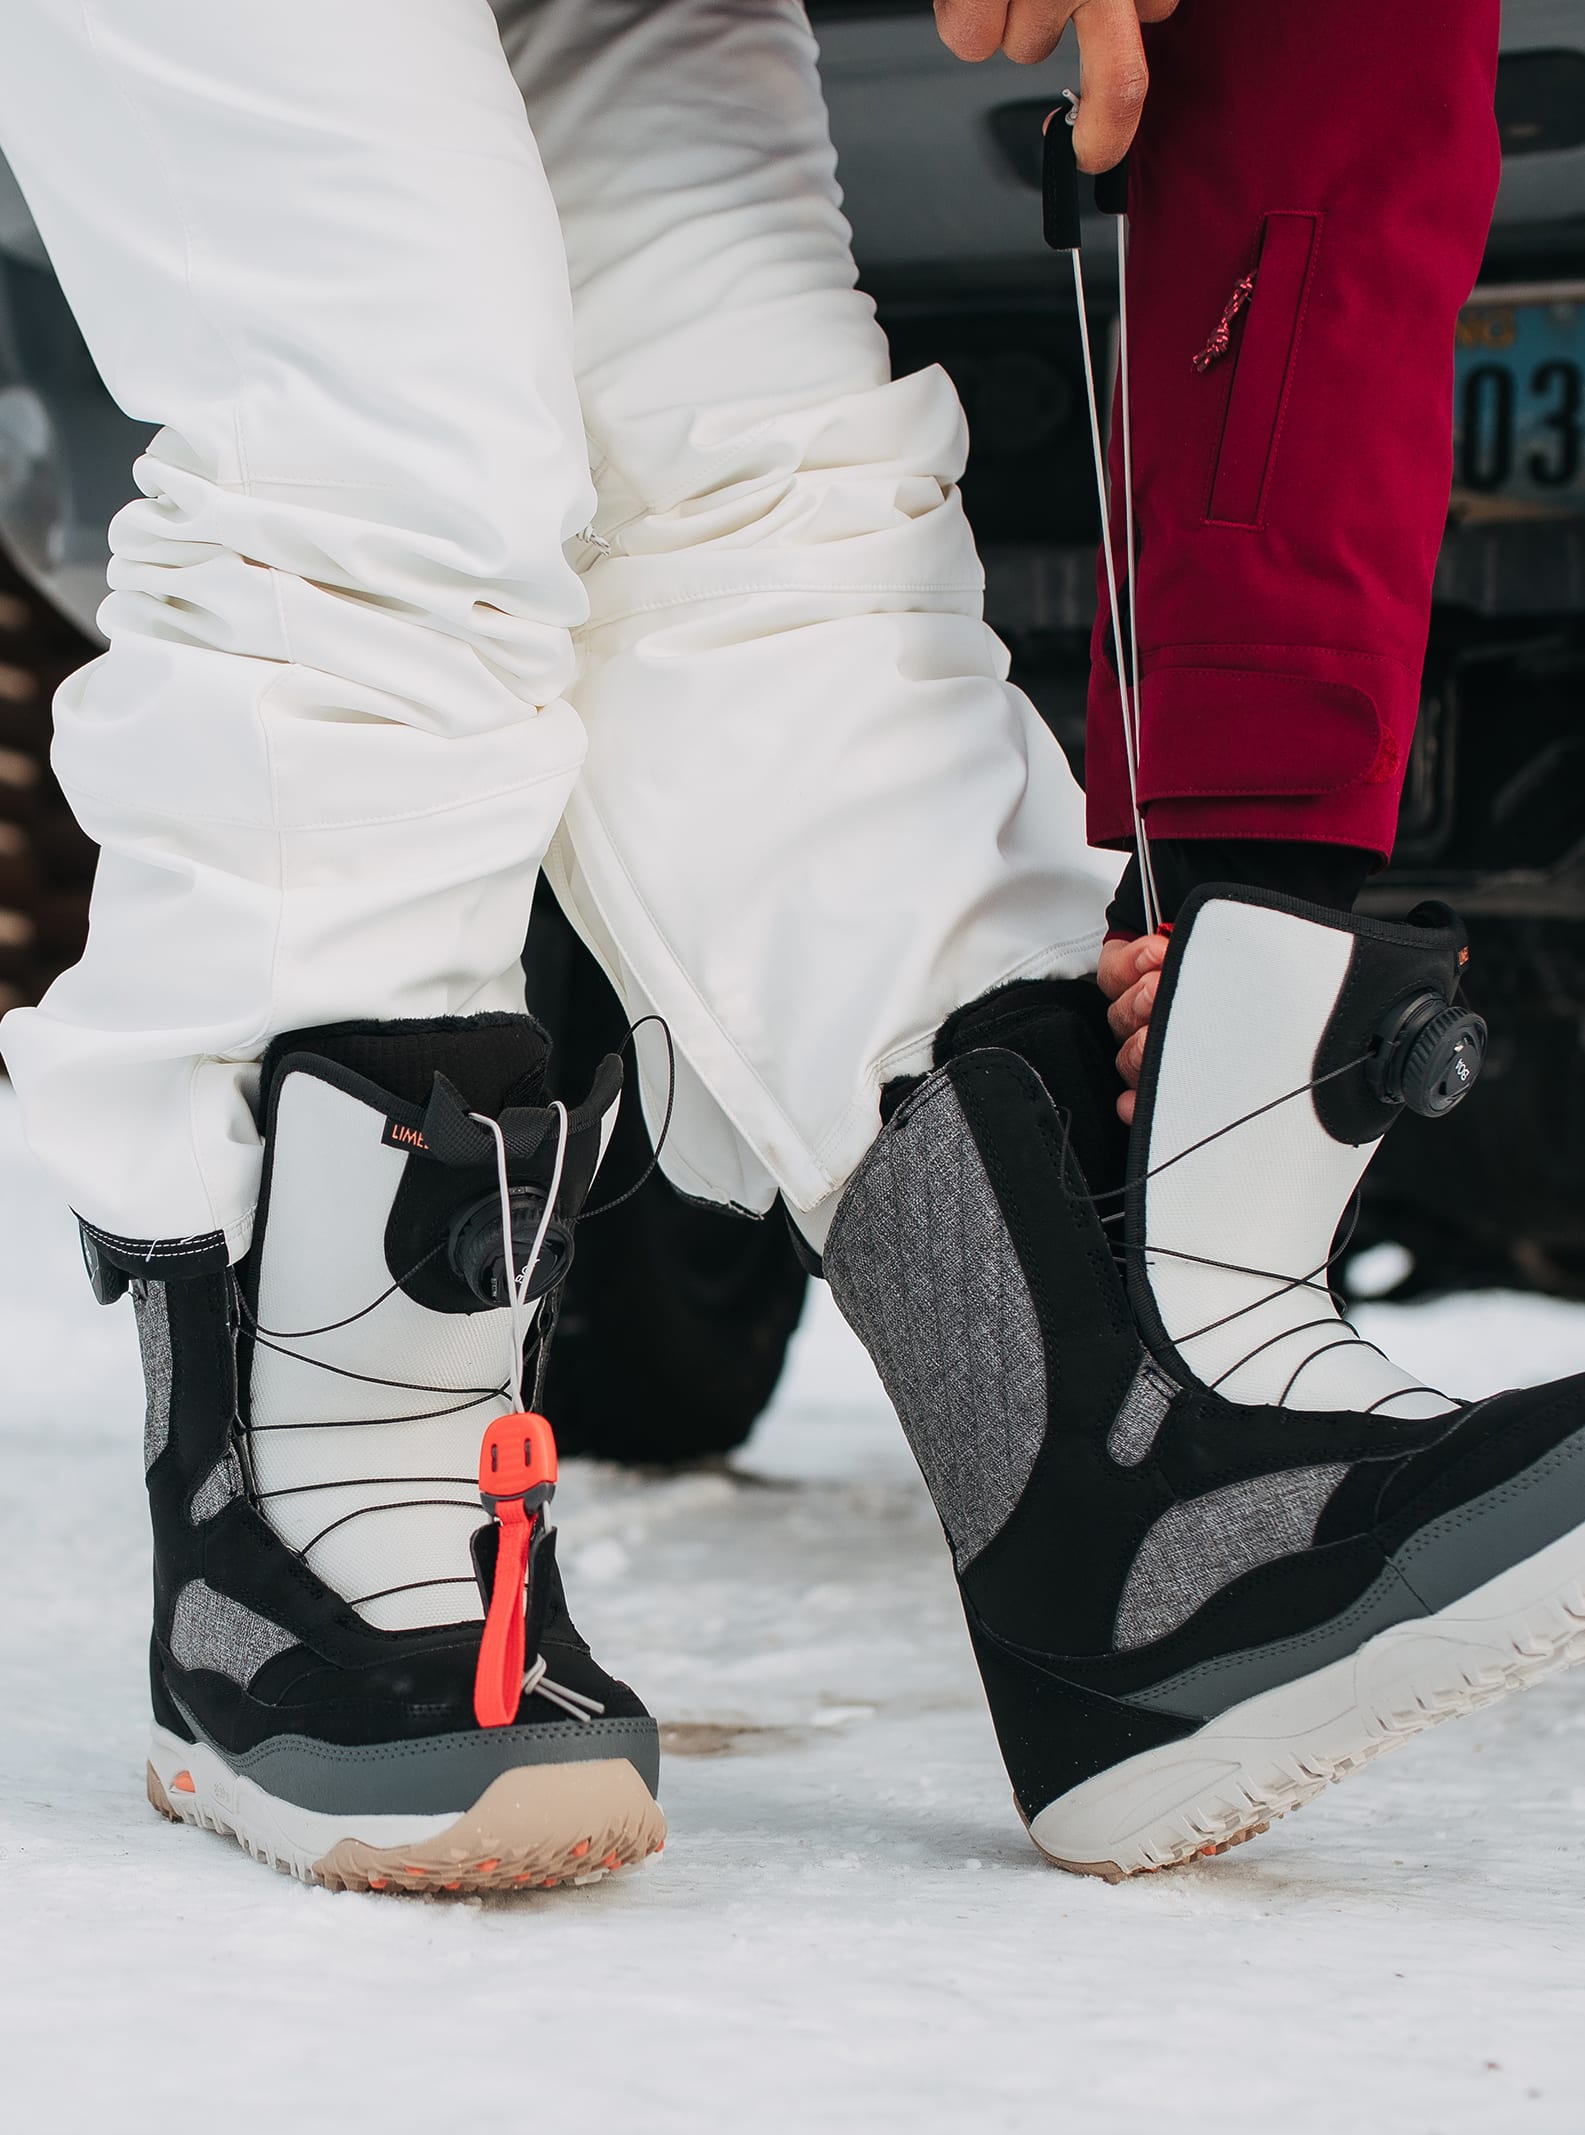 Women's Burton Limelight BOA® Snowboard Boots | Burton.com Winter 2022 US